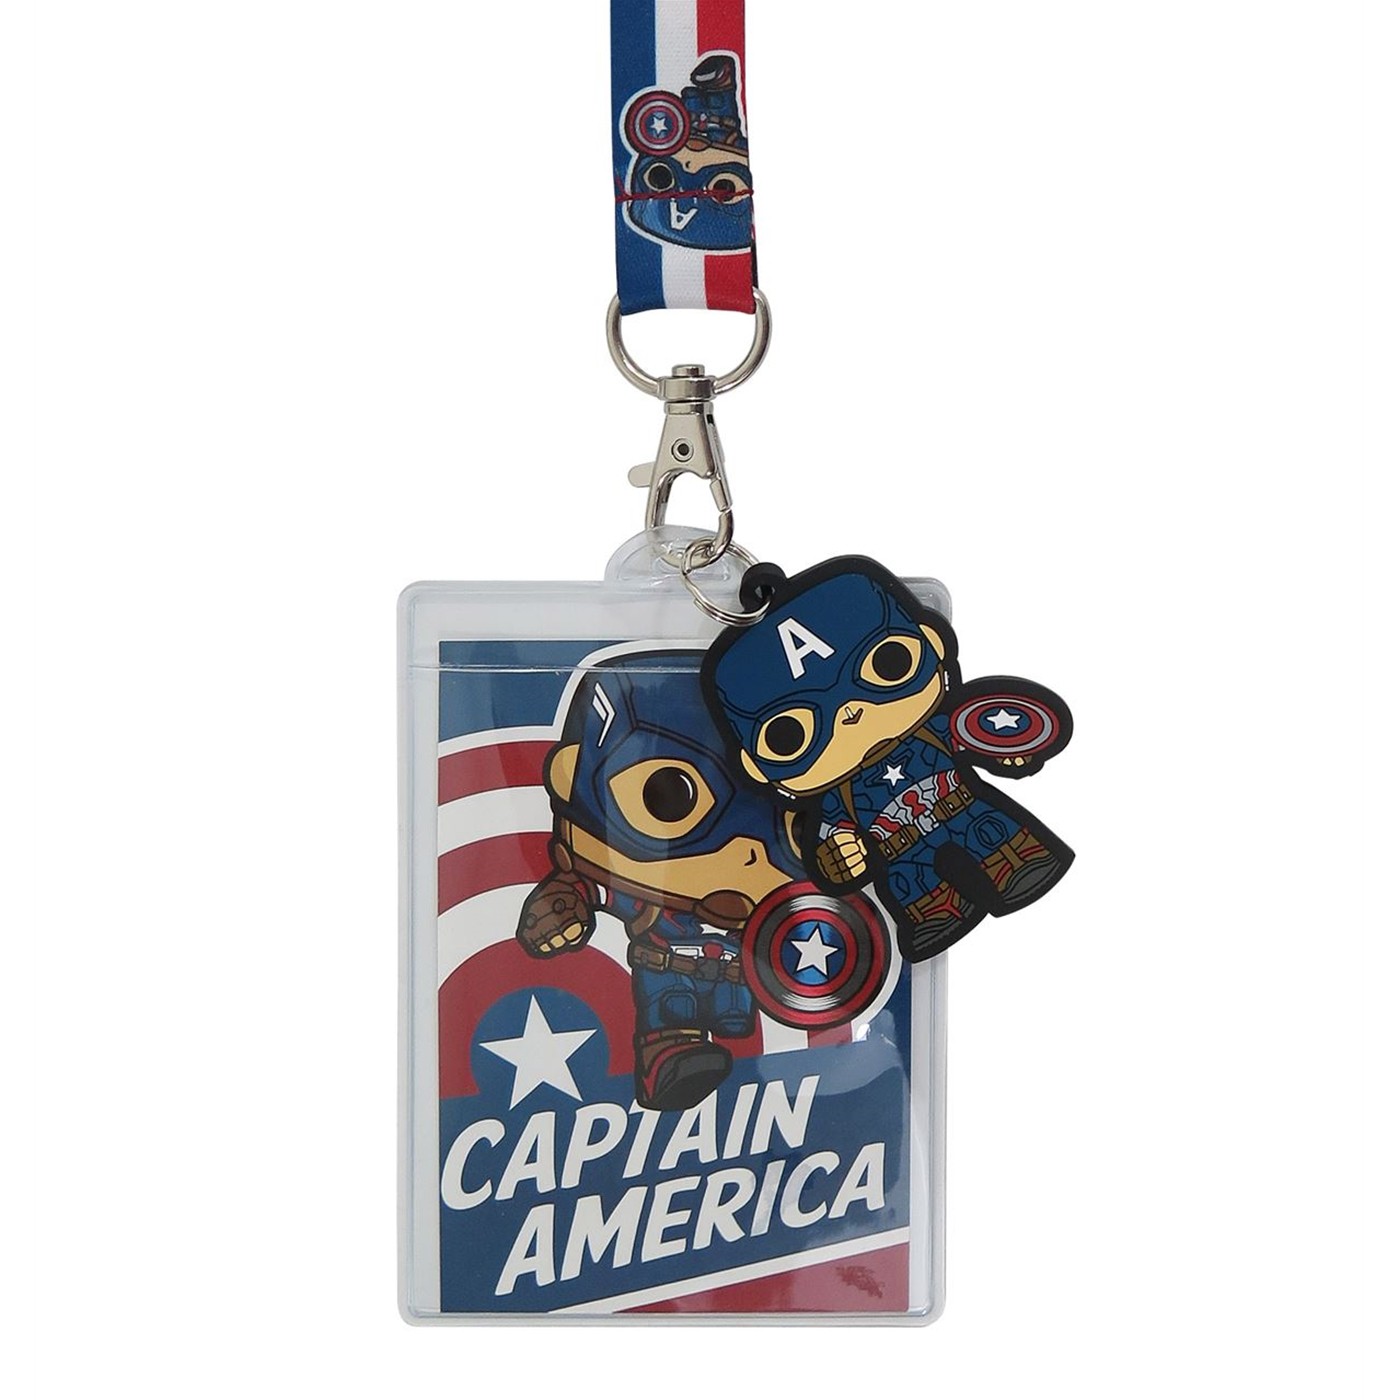 Captain America Funko Pop! Lanyard with Charm